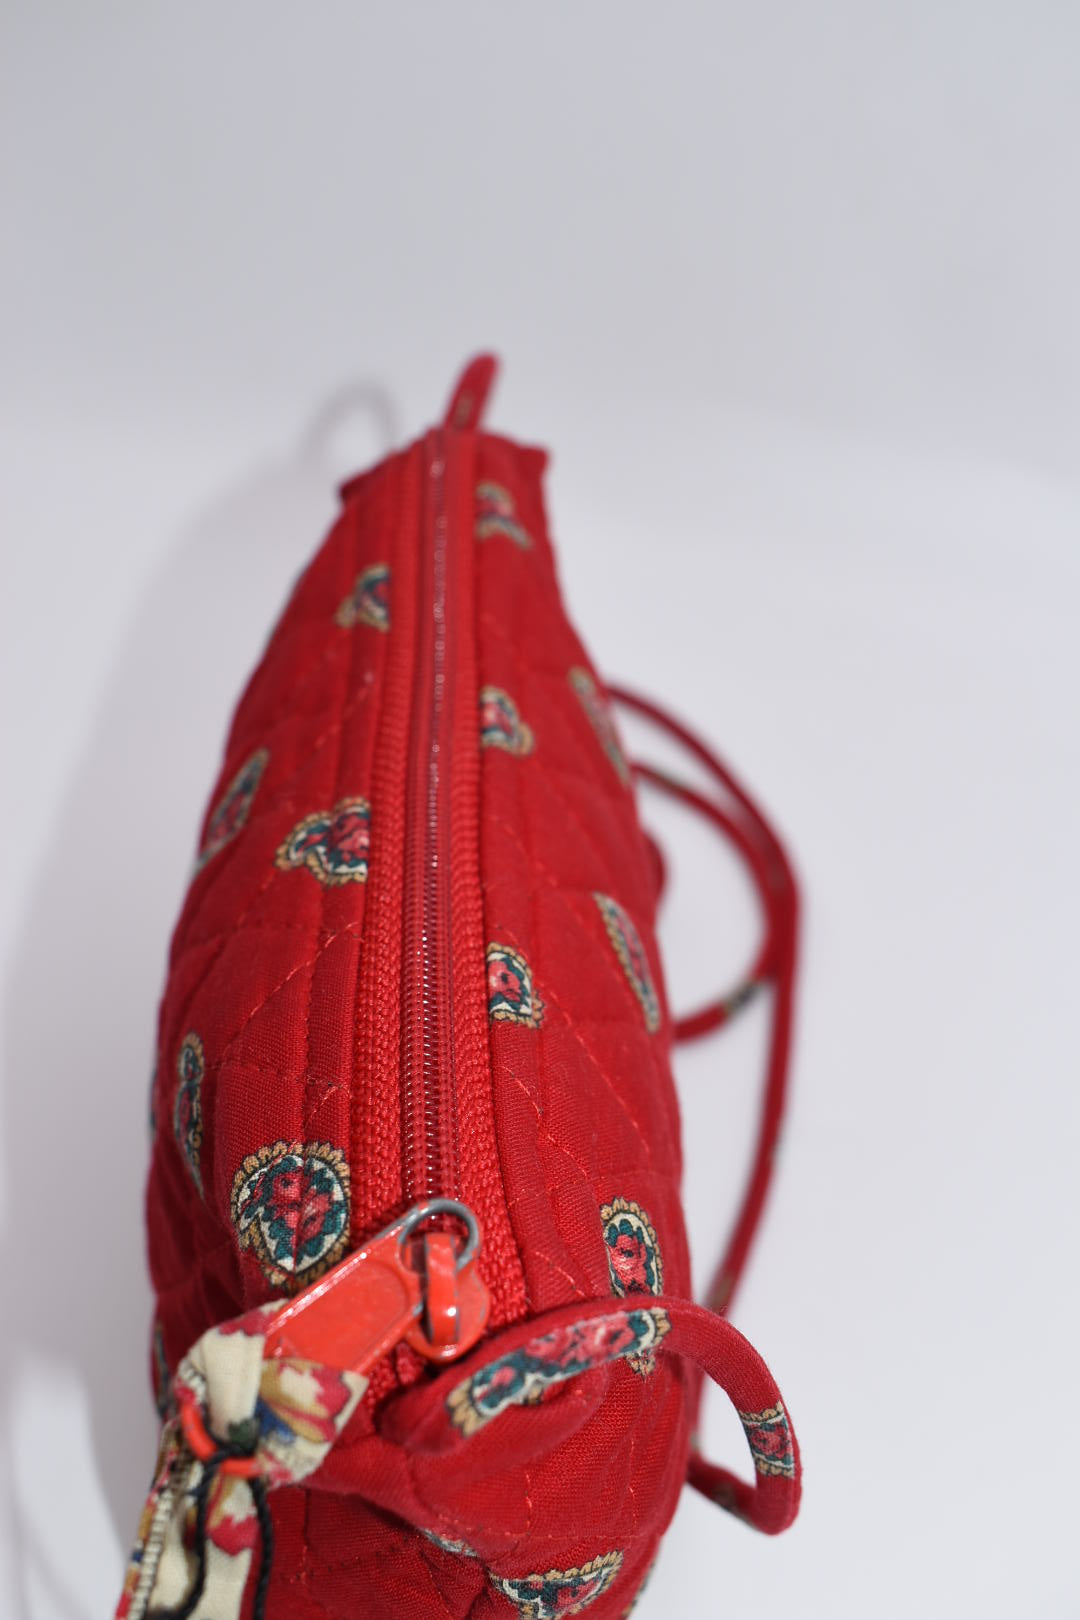 Vintage Vera Bradley Small Crossbody Bag in "Apple Red - 1991" Pattern